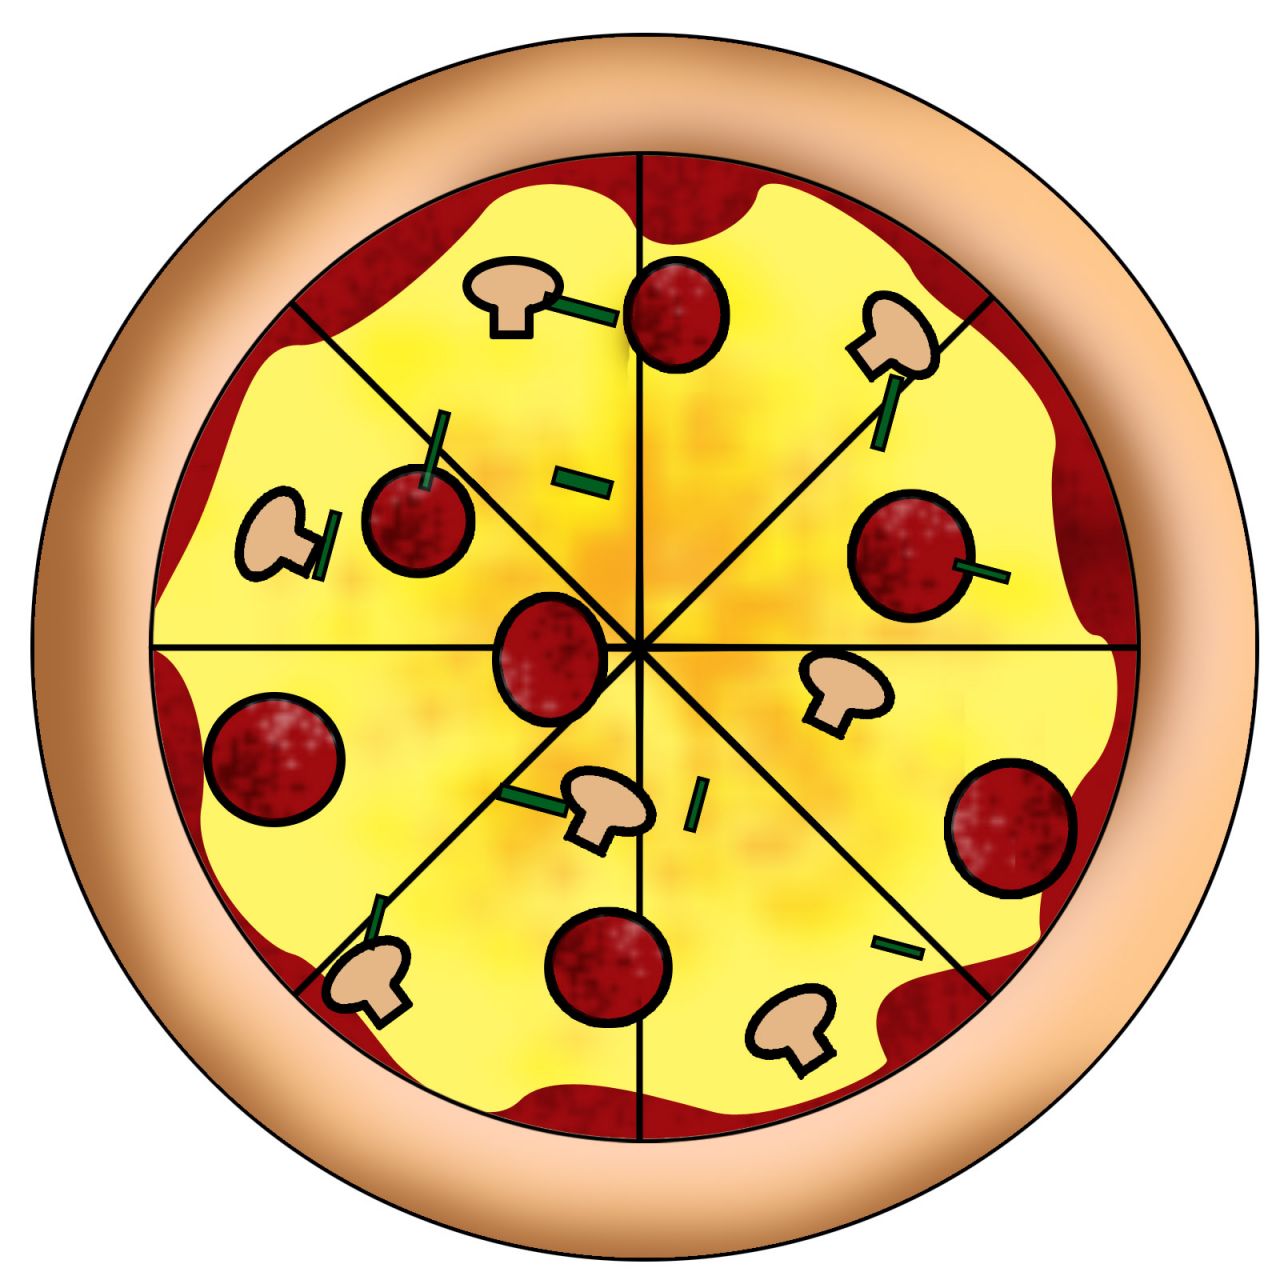 Pizza Cartoon Image